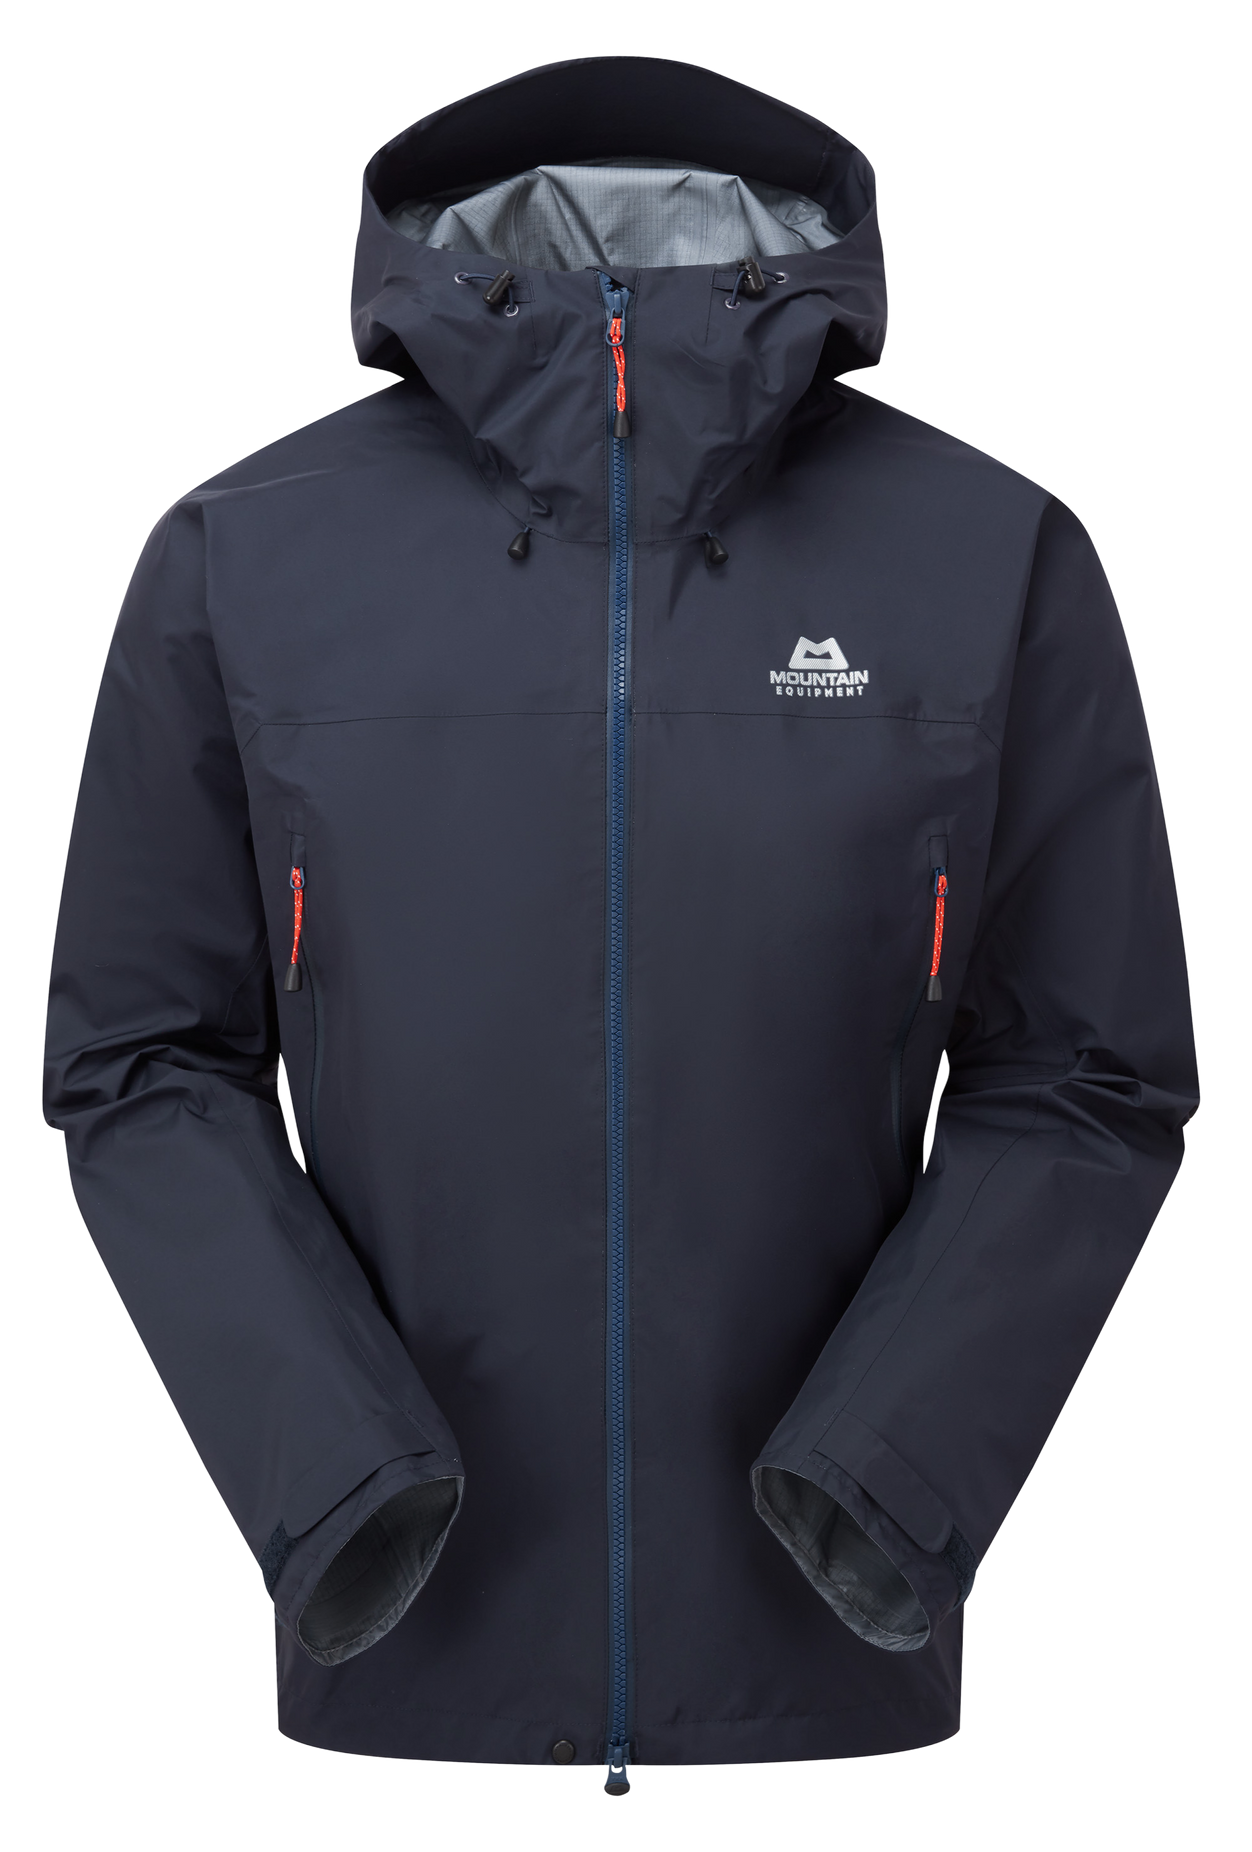 Shivling Jacket | GORE-TEX PRO | Mountain Equipment